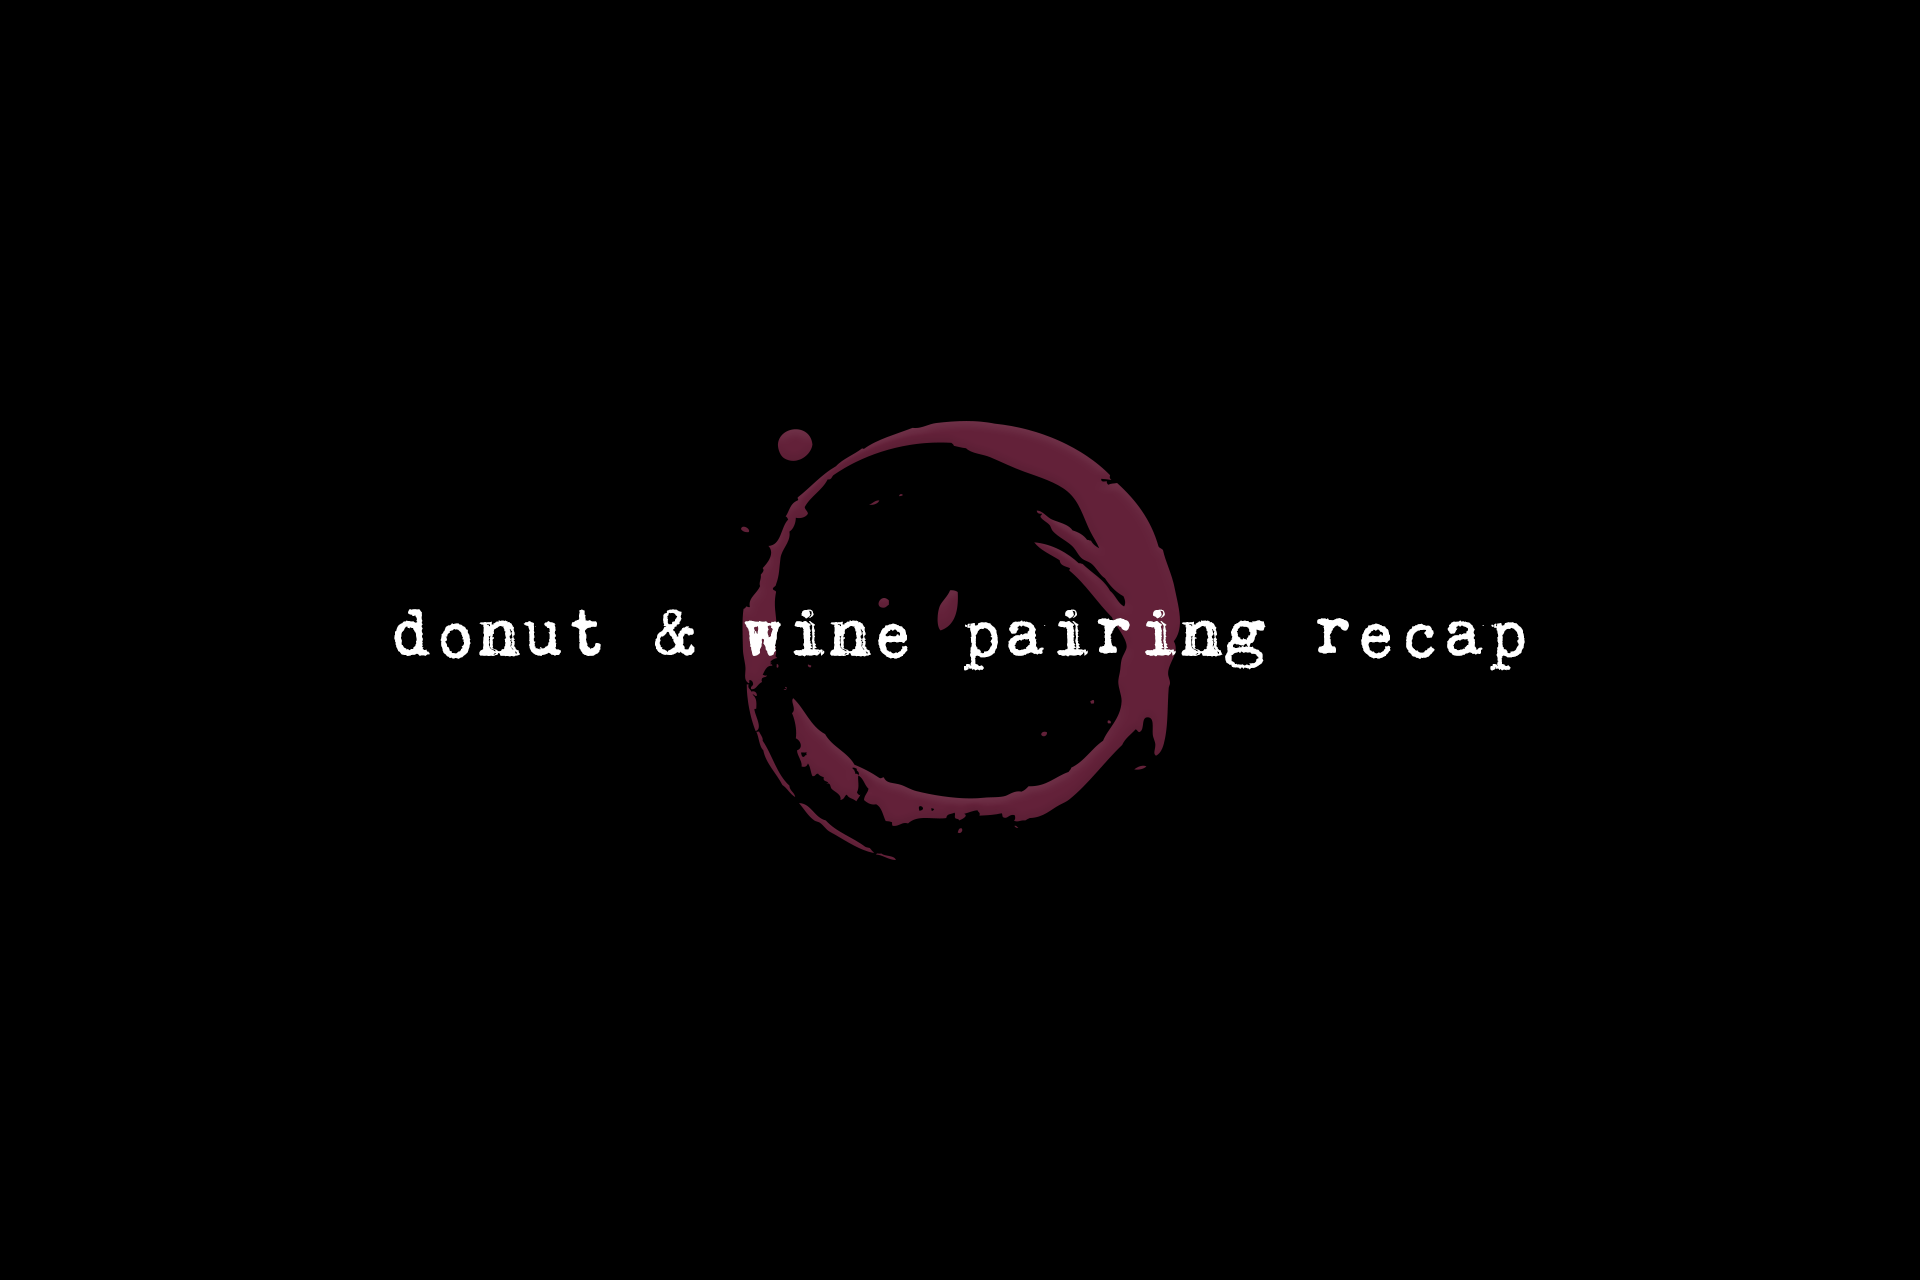 Hypnotic Donuts & Wine Pairing Recap